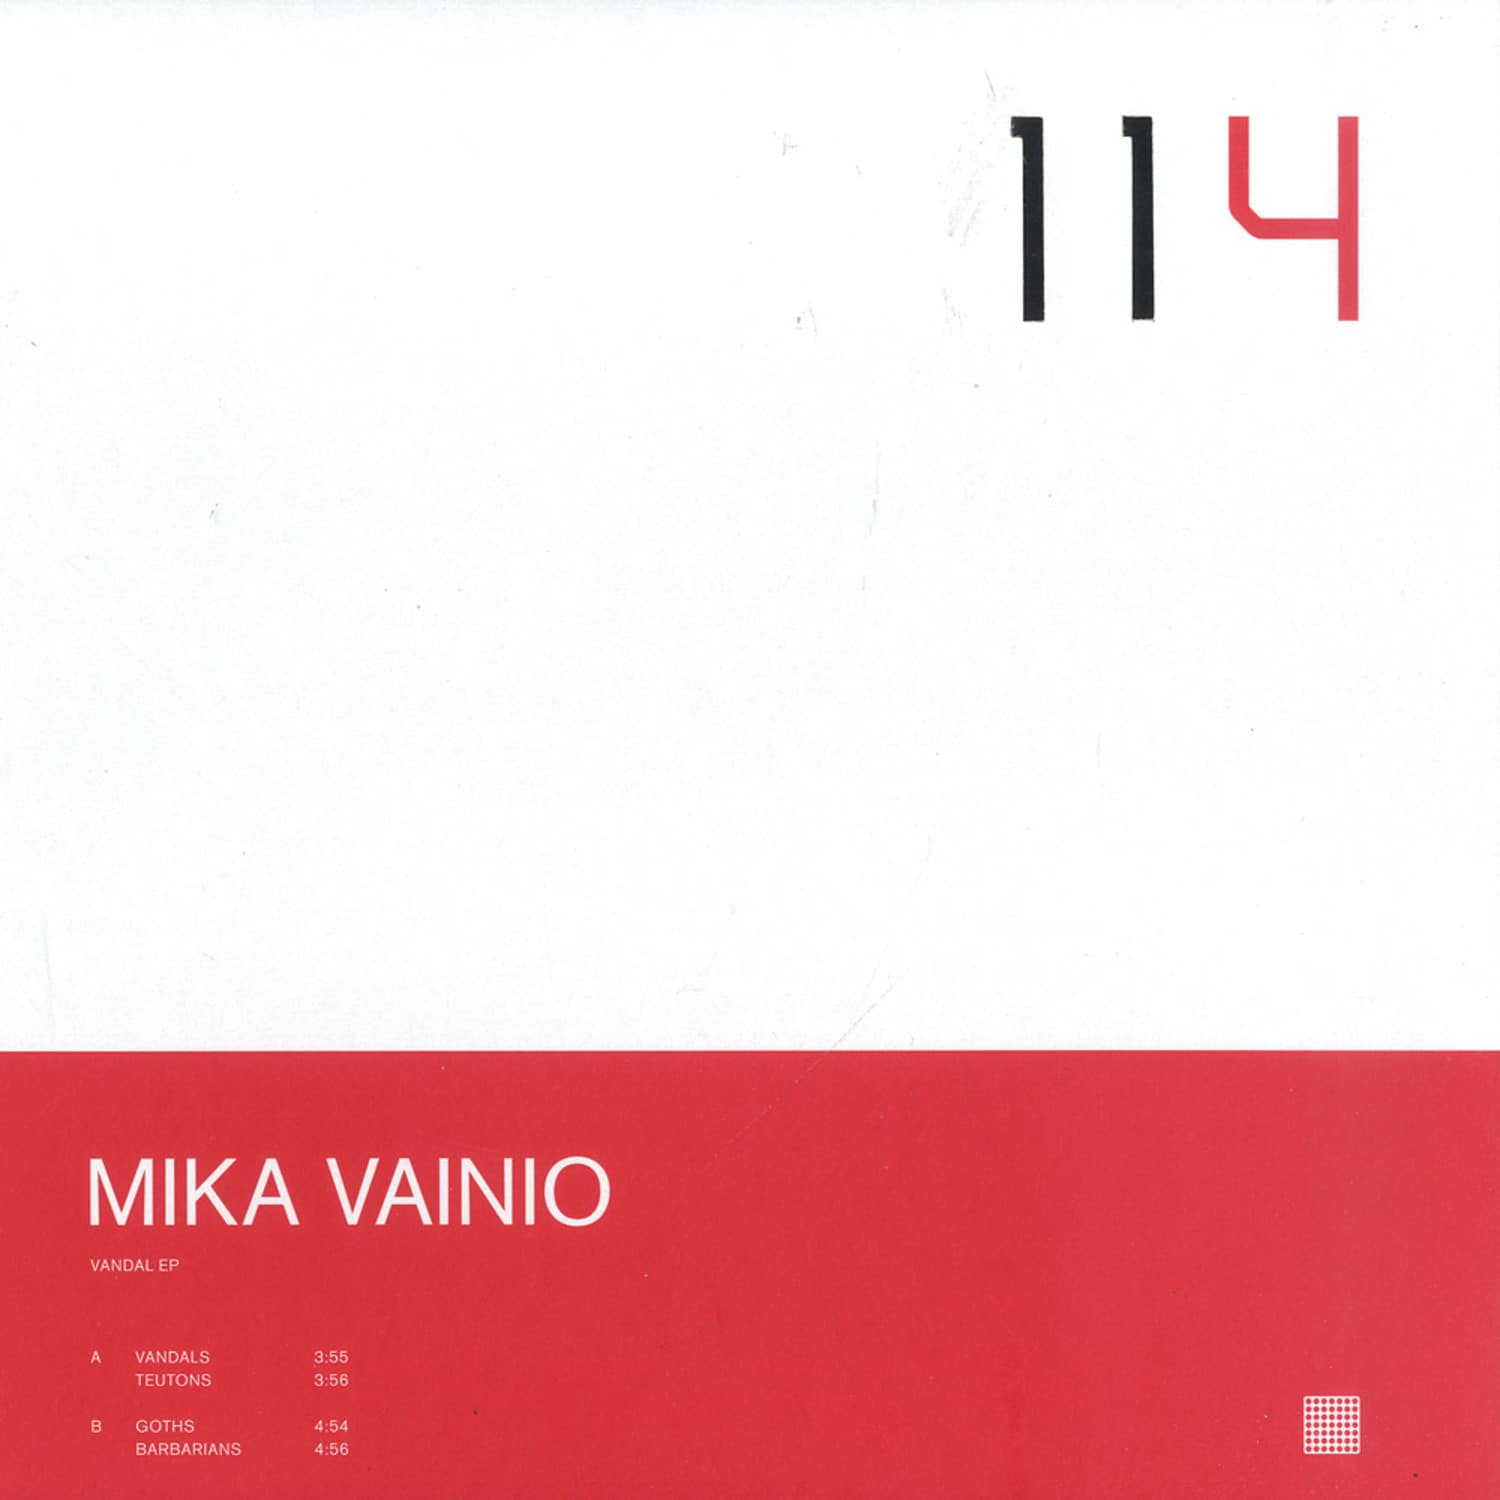 Mika Vainio - VANDAL EP